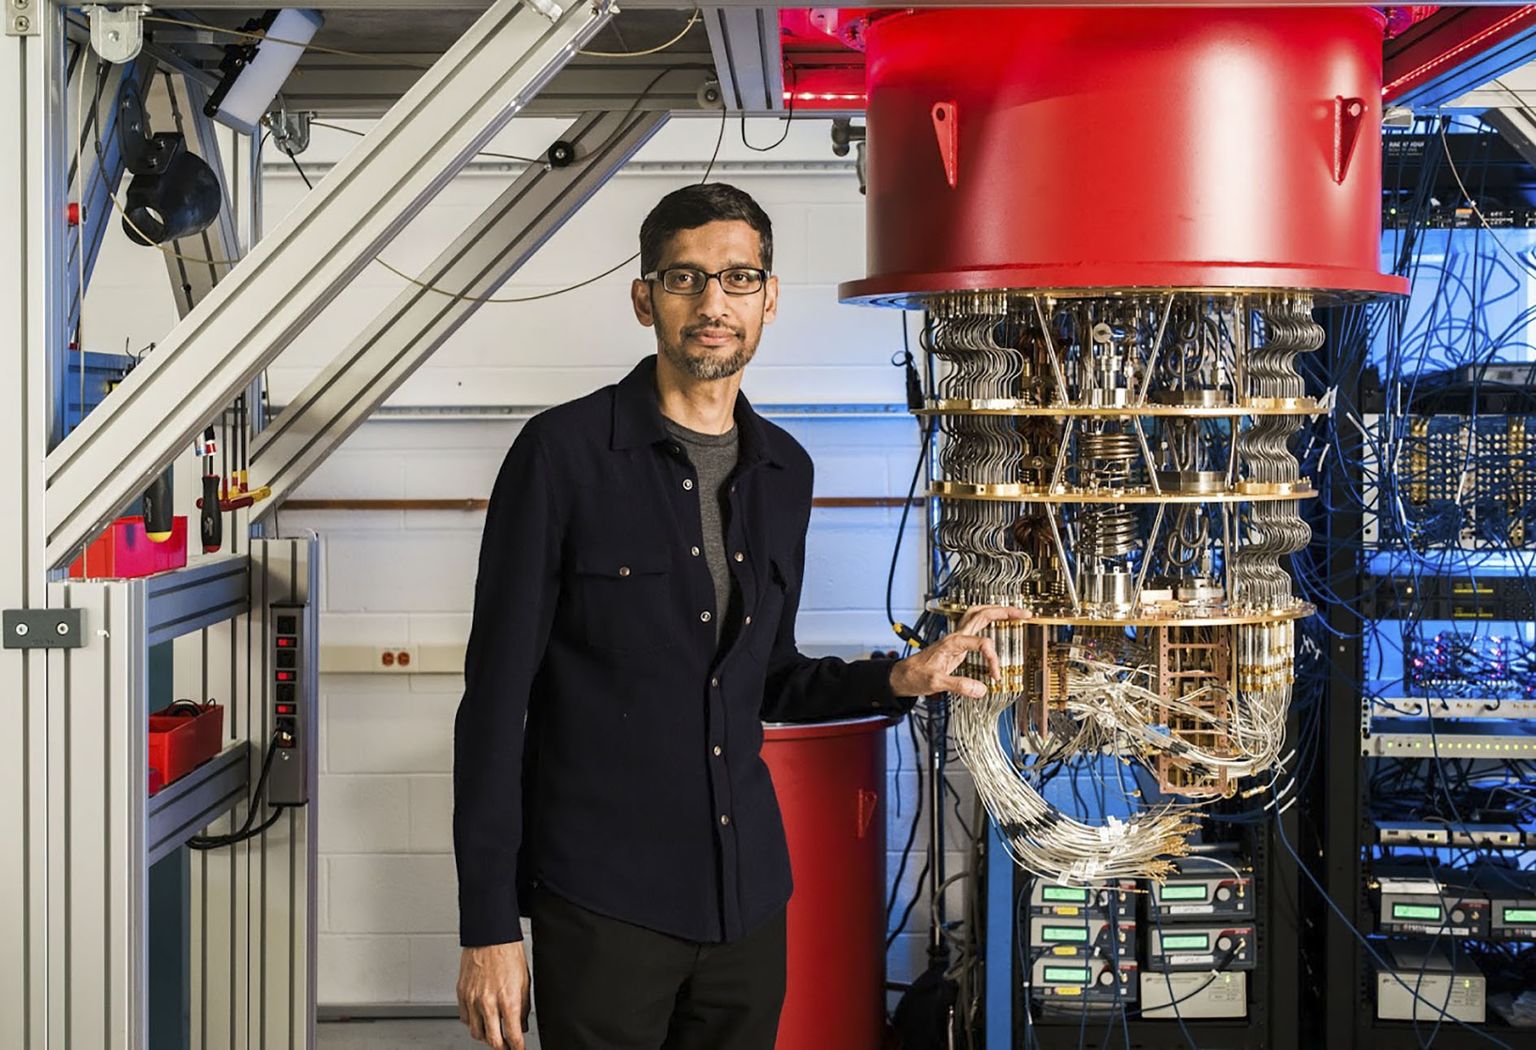 Google juht Sundar Pichai seismas kvantarvuti kõrval.